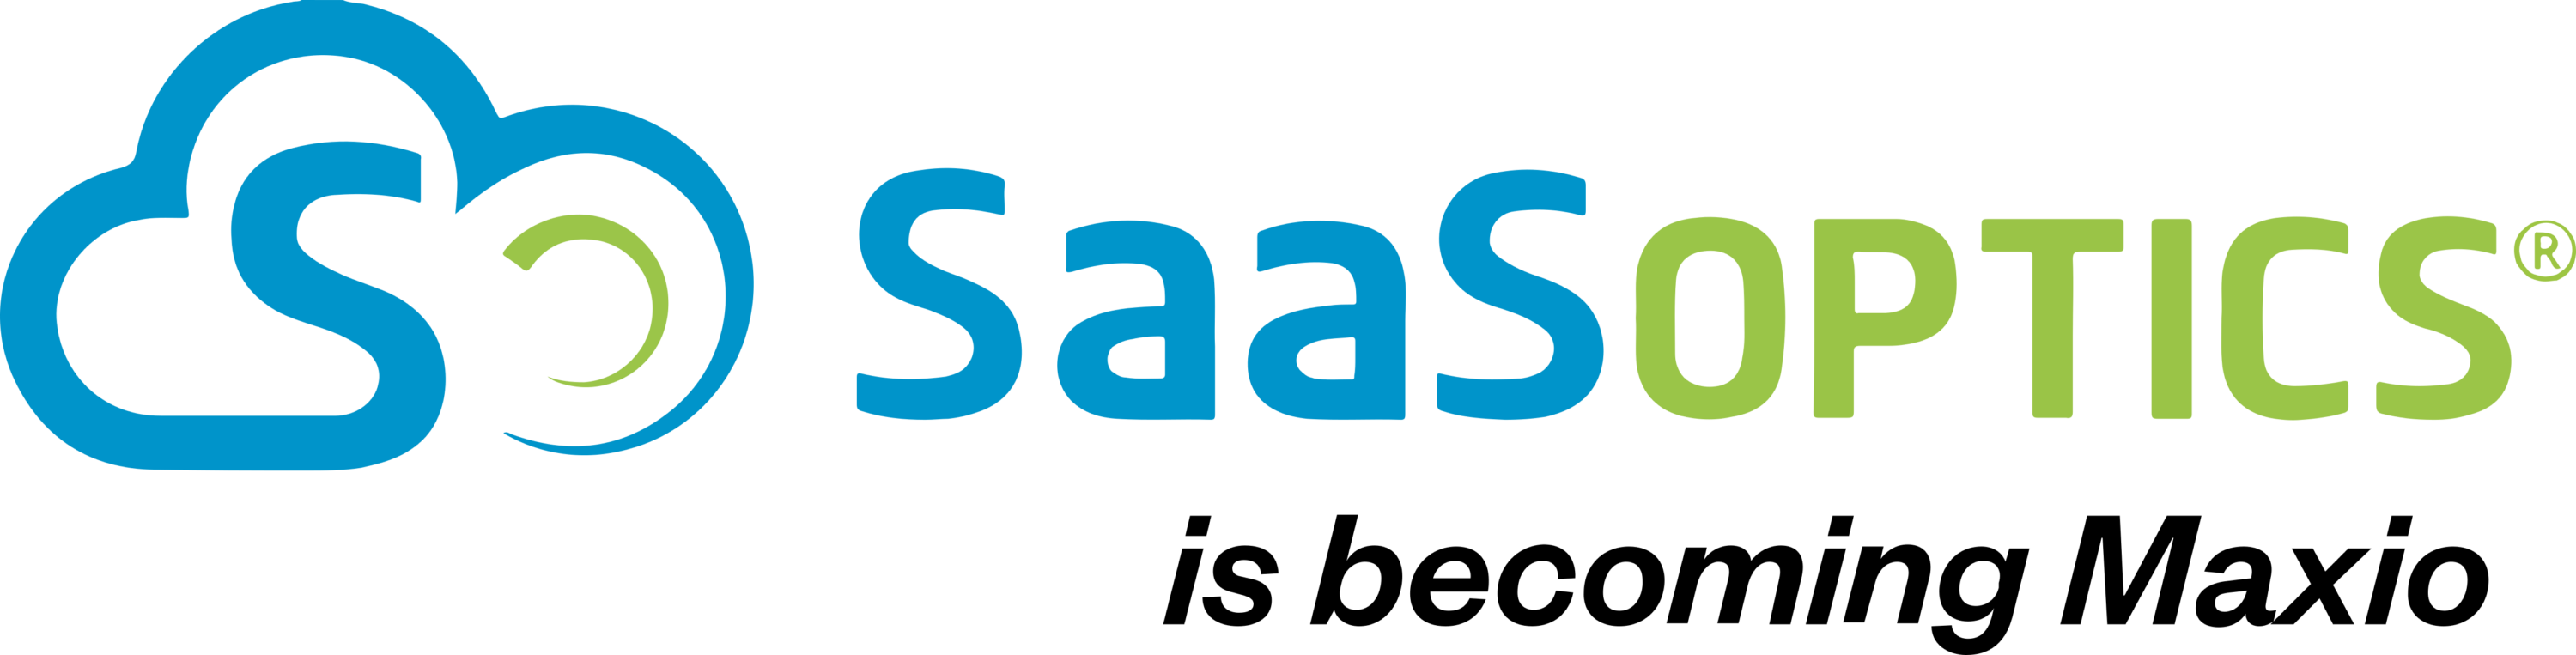 SaaSoptics Logo